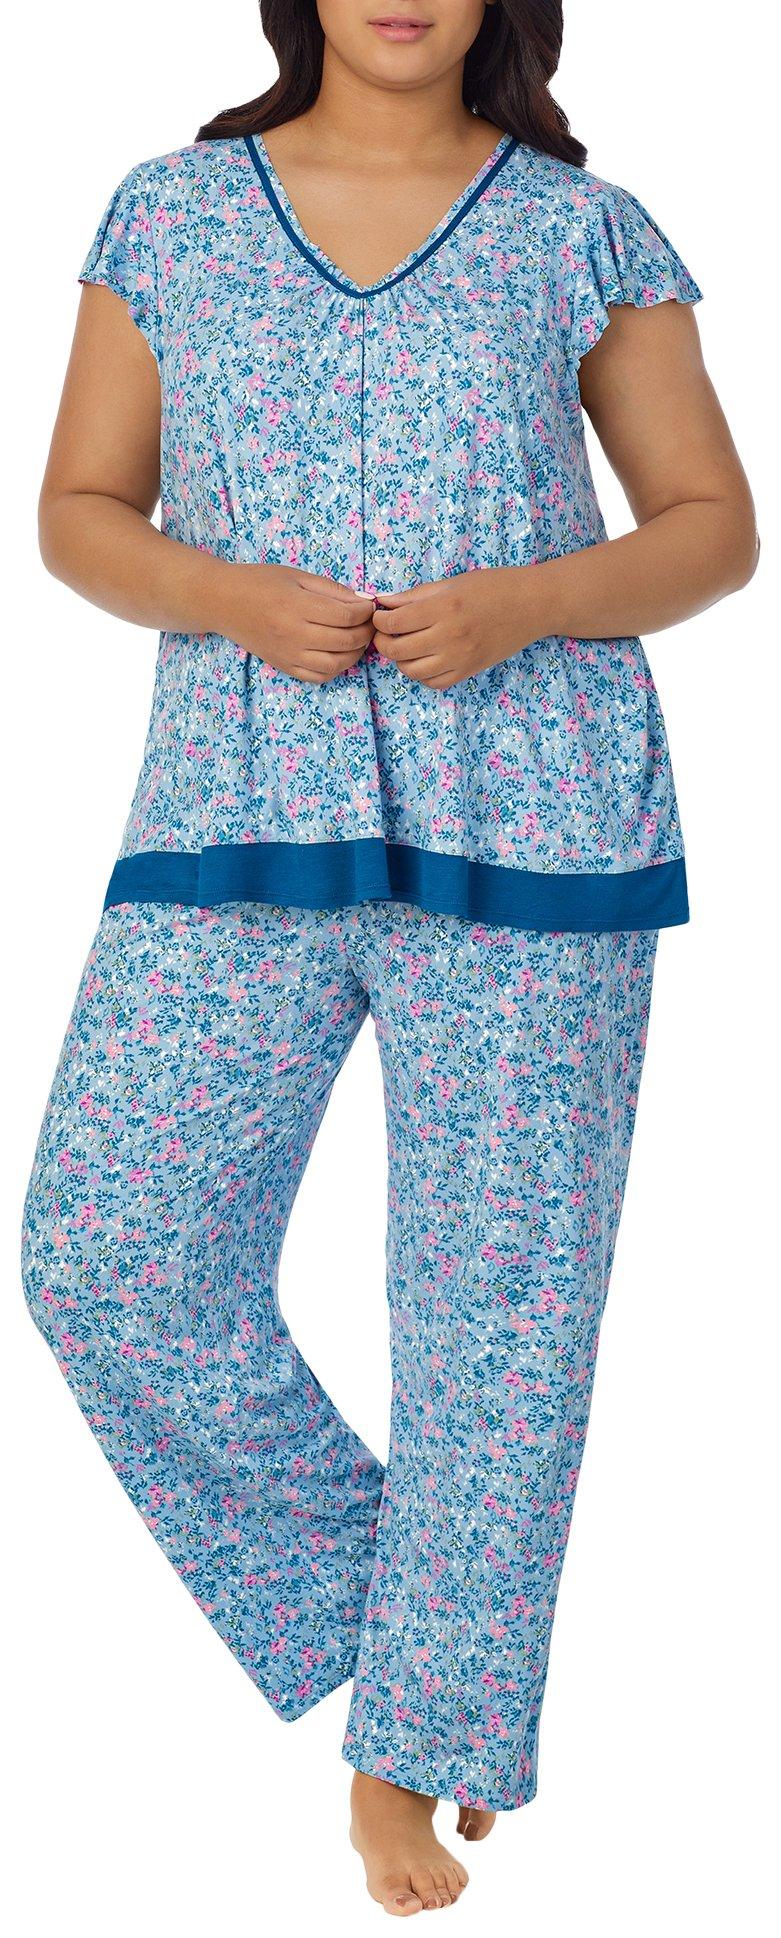 Croft & Barrow WOMEN'S PLUS SIZE 3X Long Sleeve Pajama Top